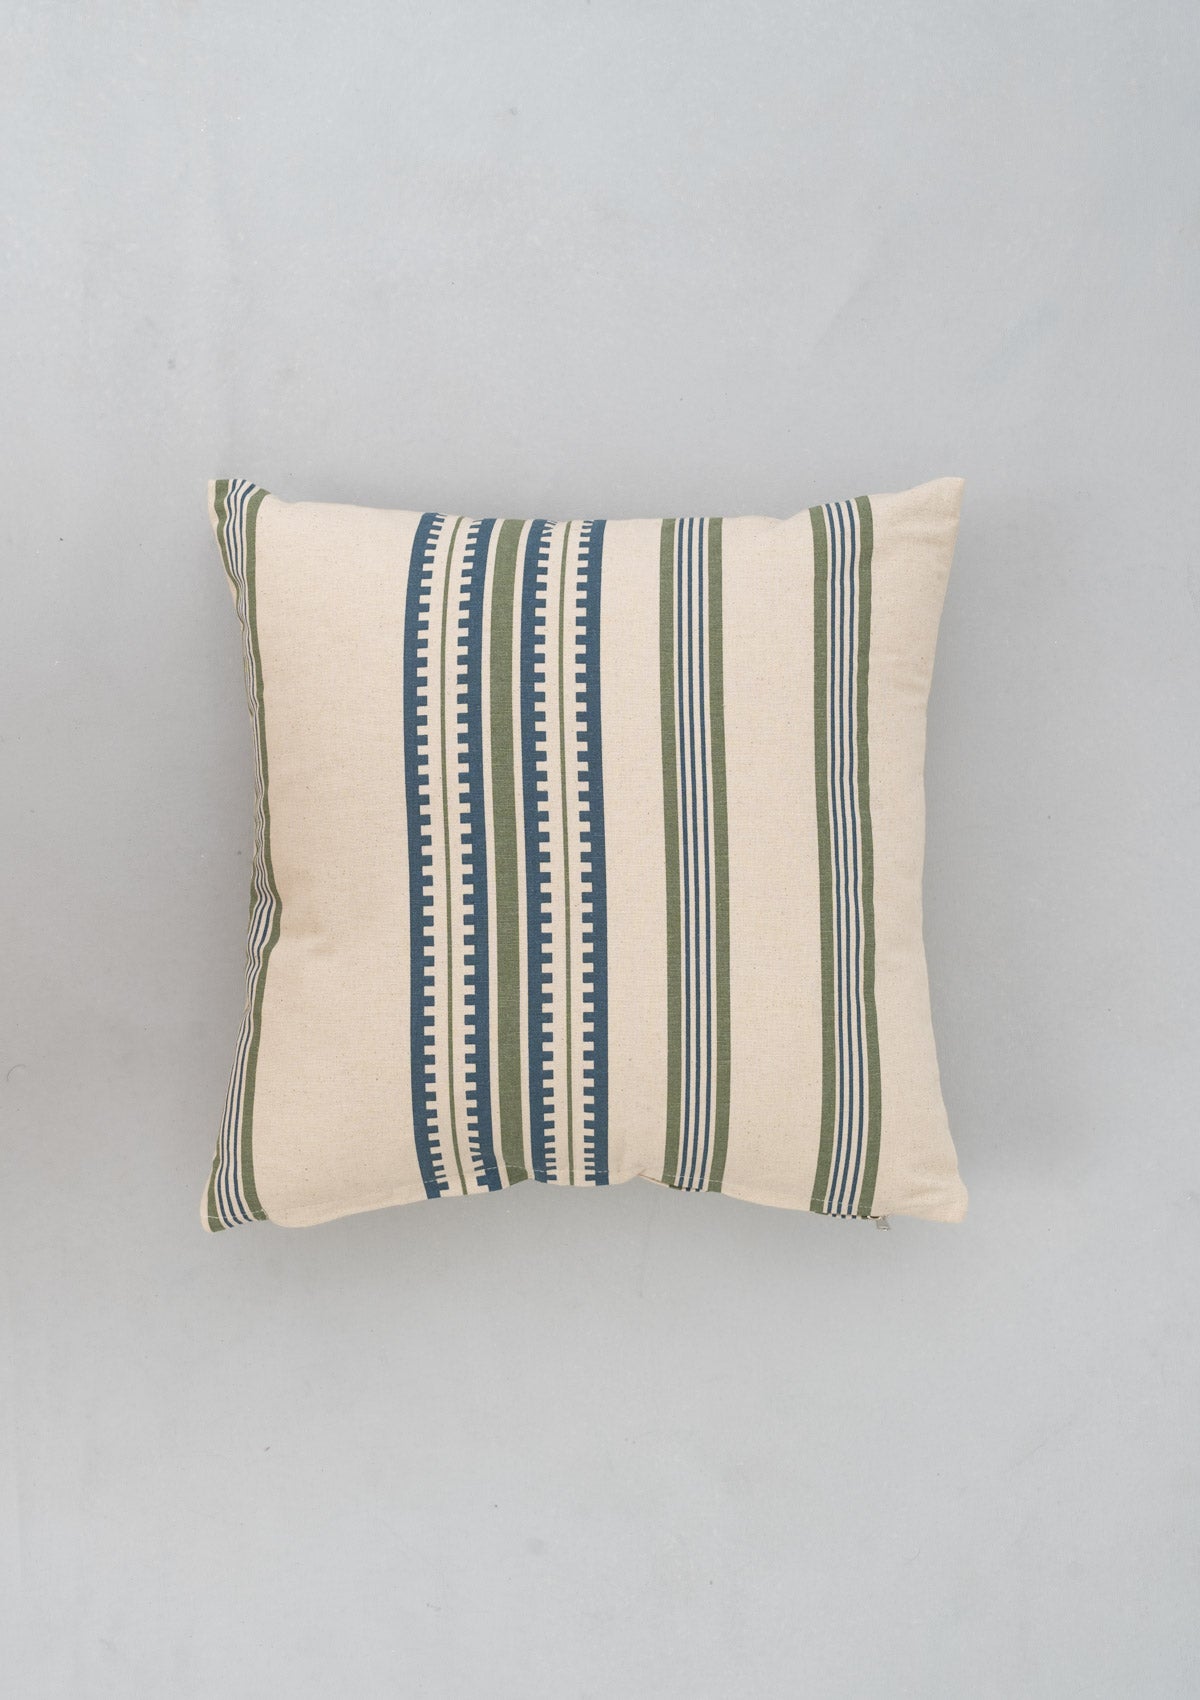 Roman Stripes 100% cotton geometric cushion cover for sofa - Green and Blue